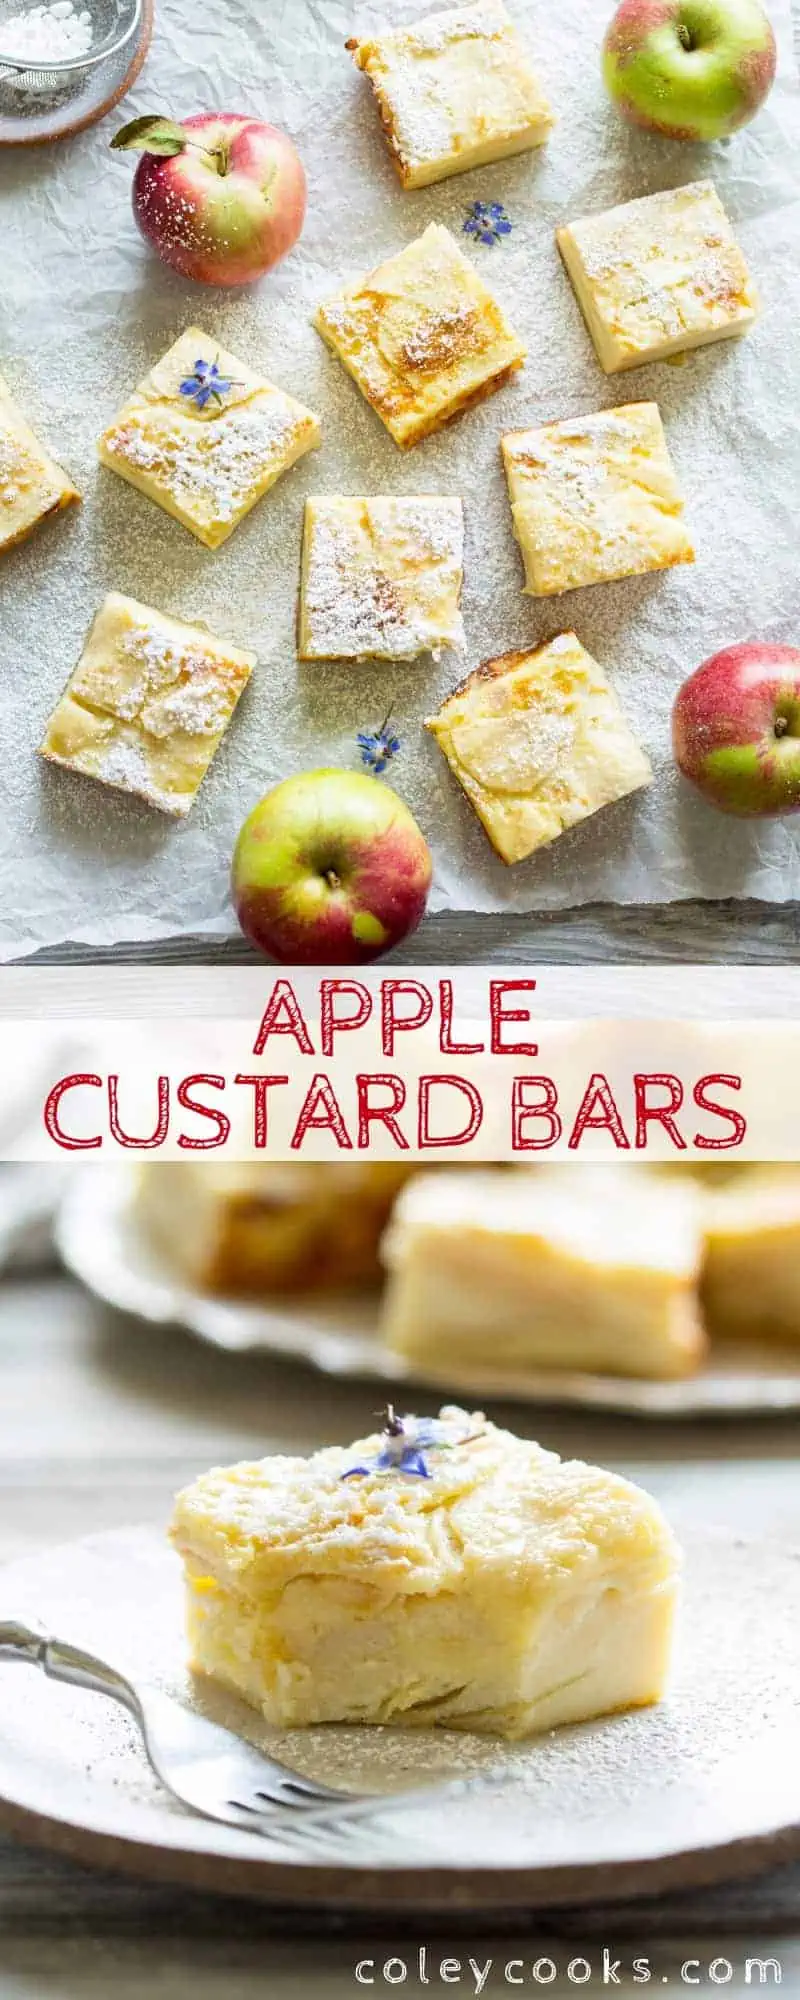 Pinterest collage of an apple custard bar recipe.